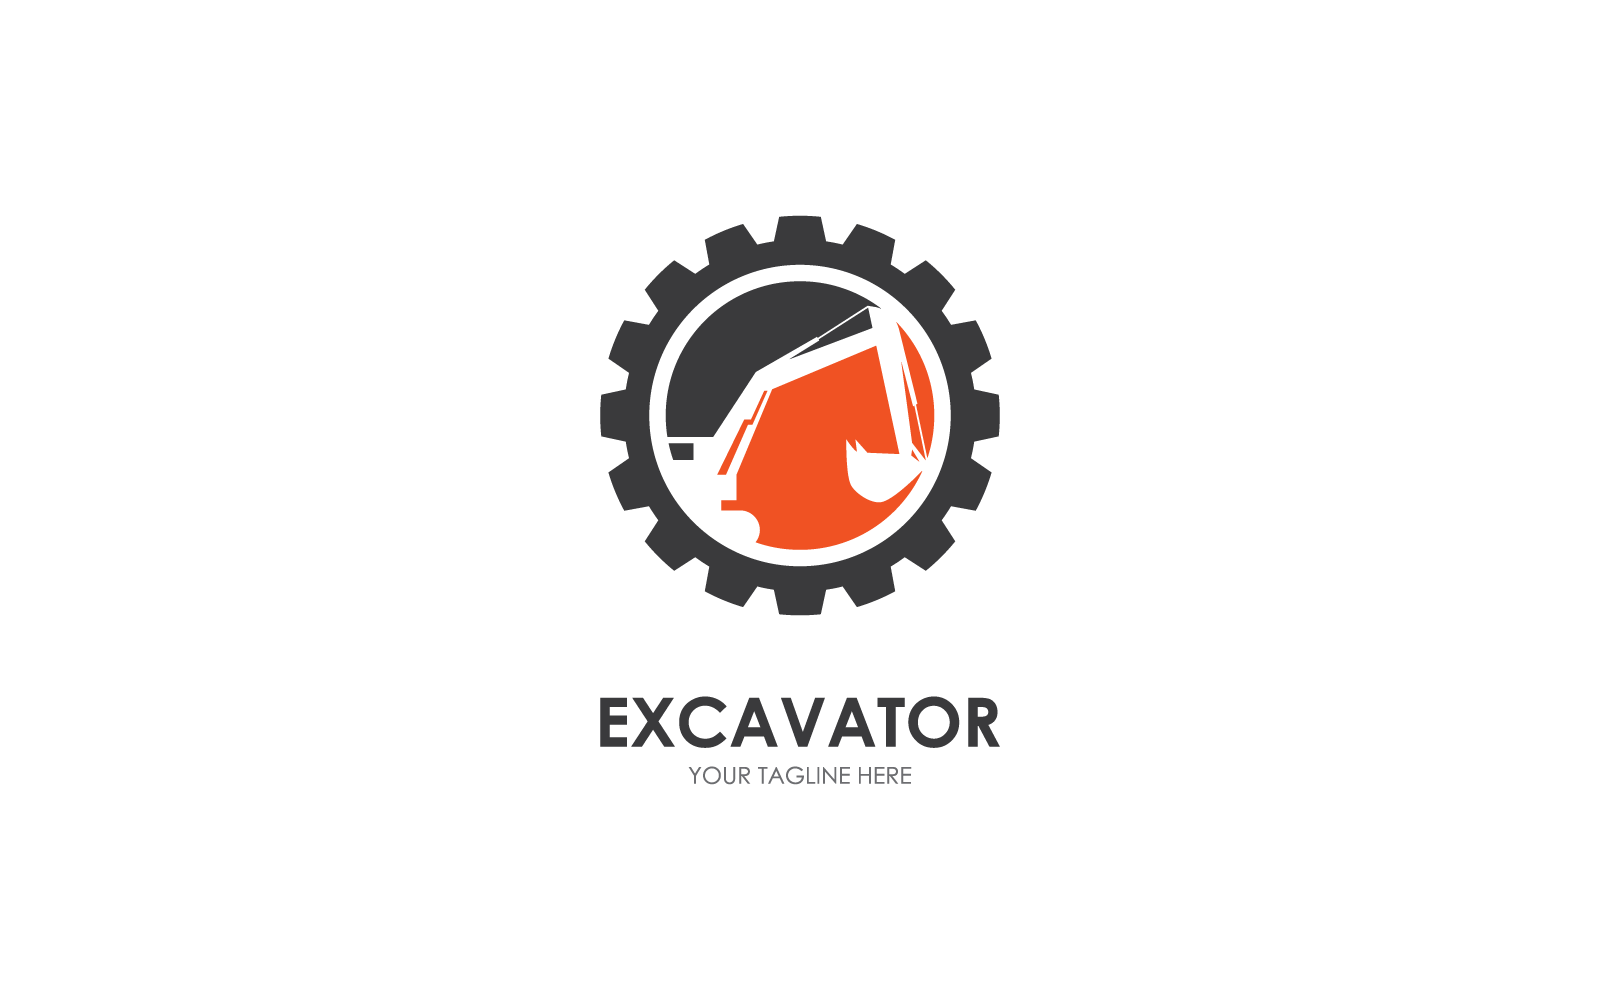 Excavator logo illustration vector design template